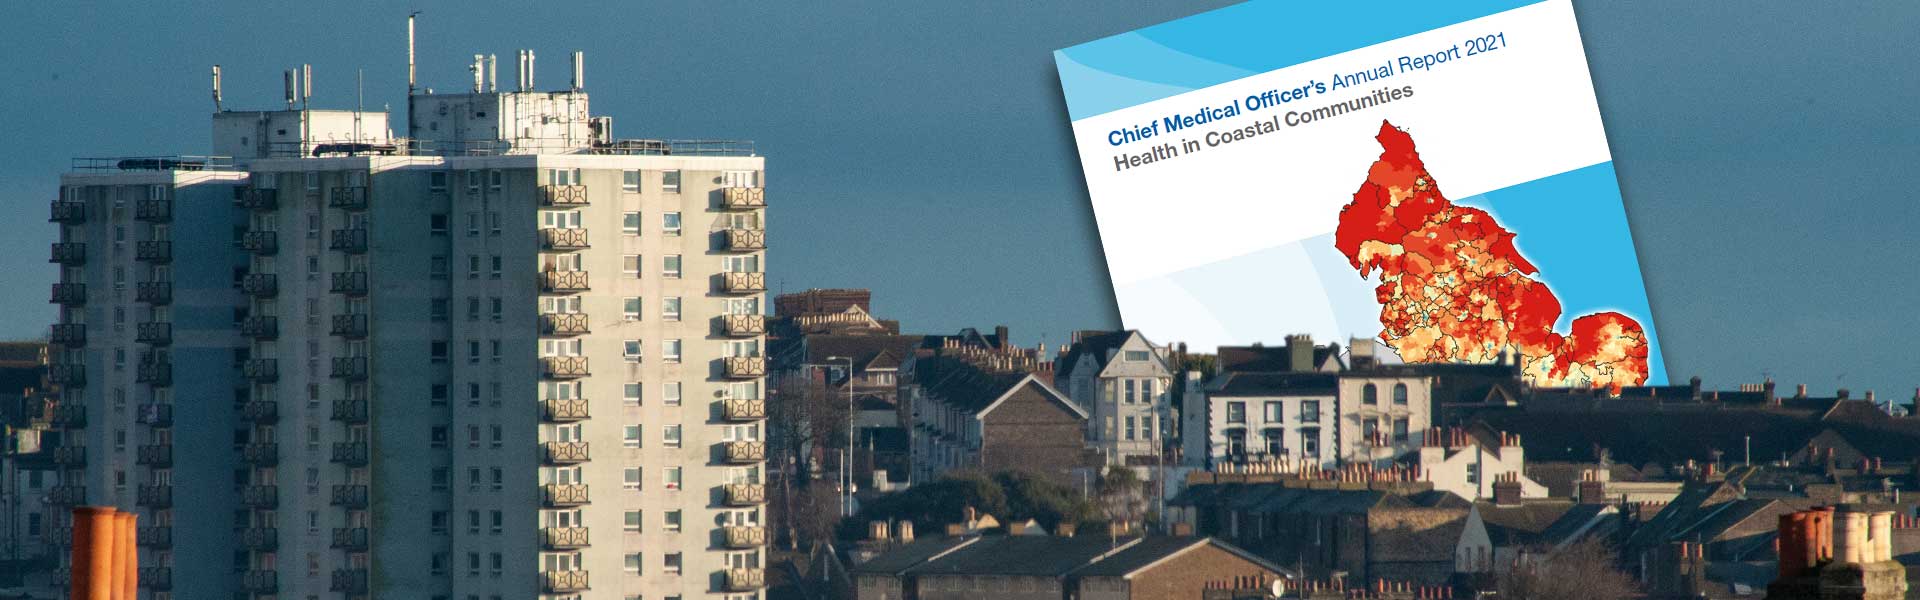 Coastal communities health report montage on Ramsgate skyline